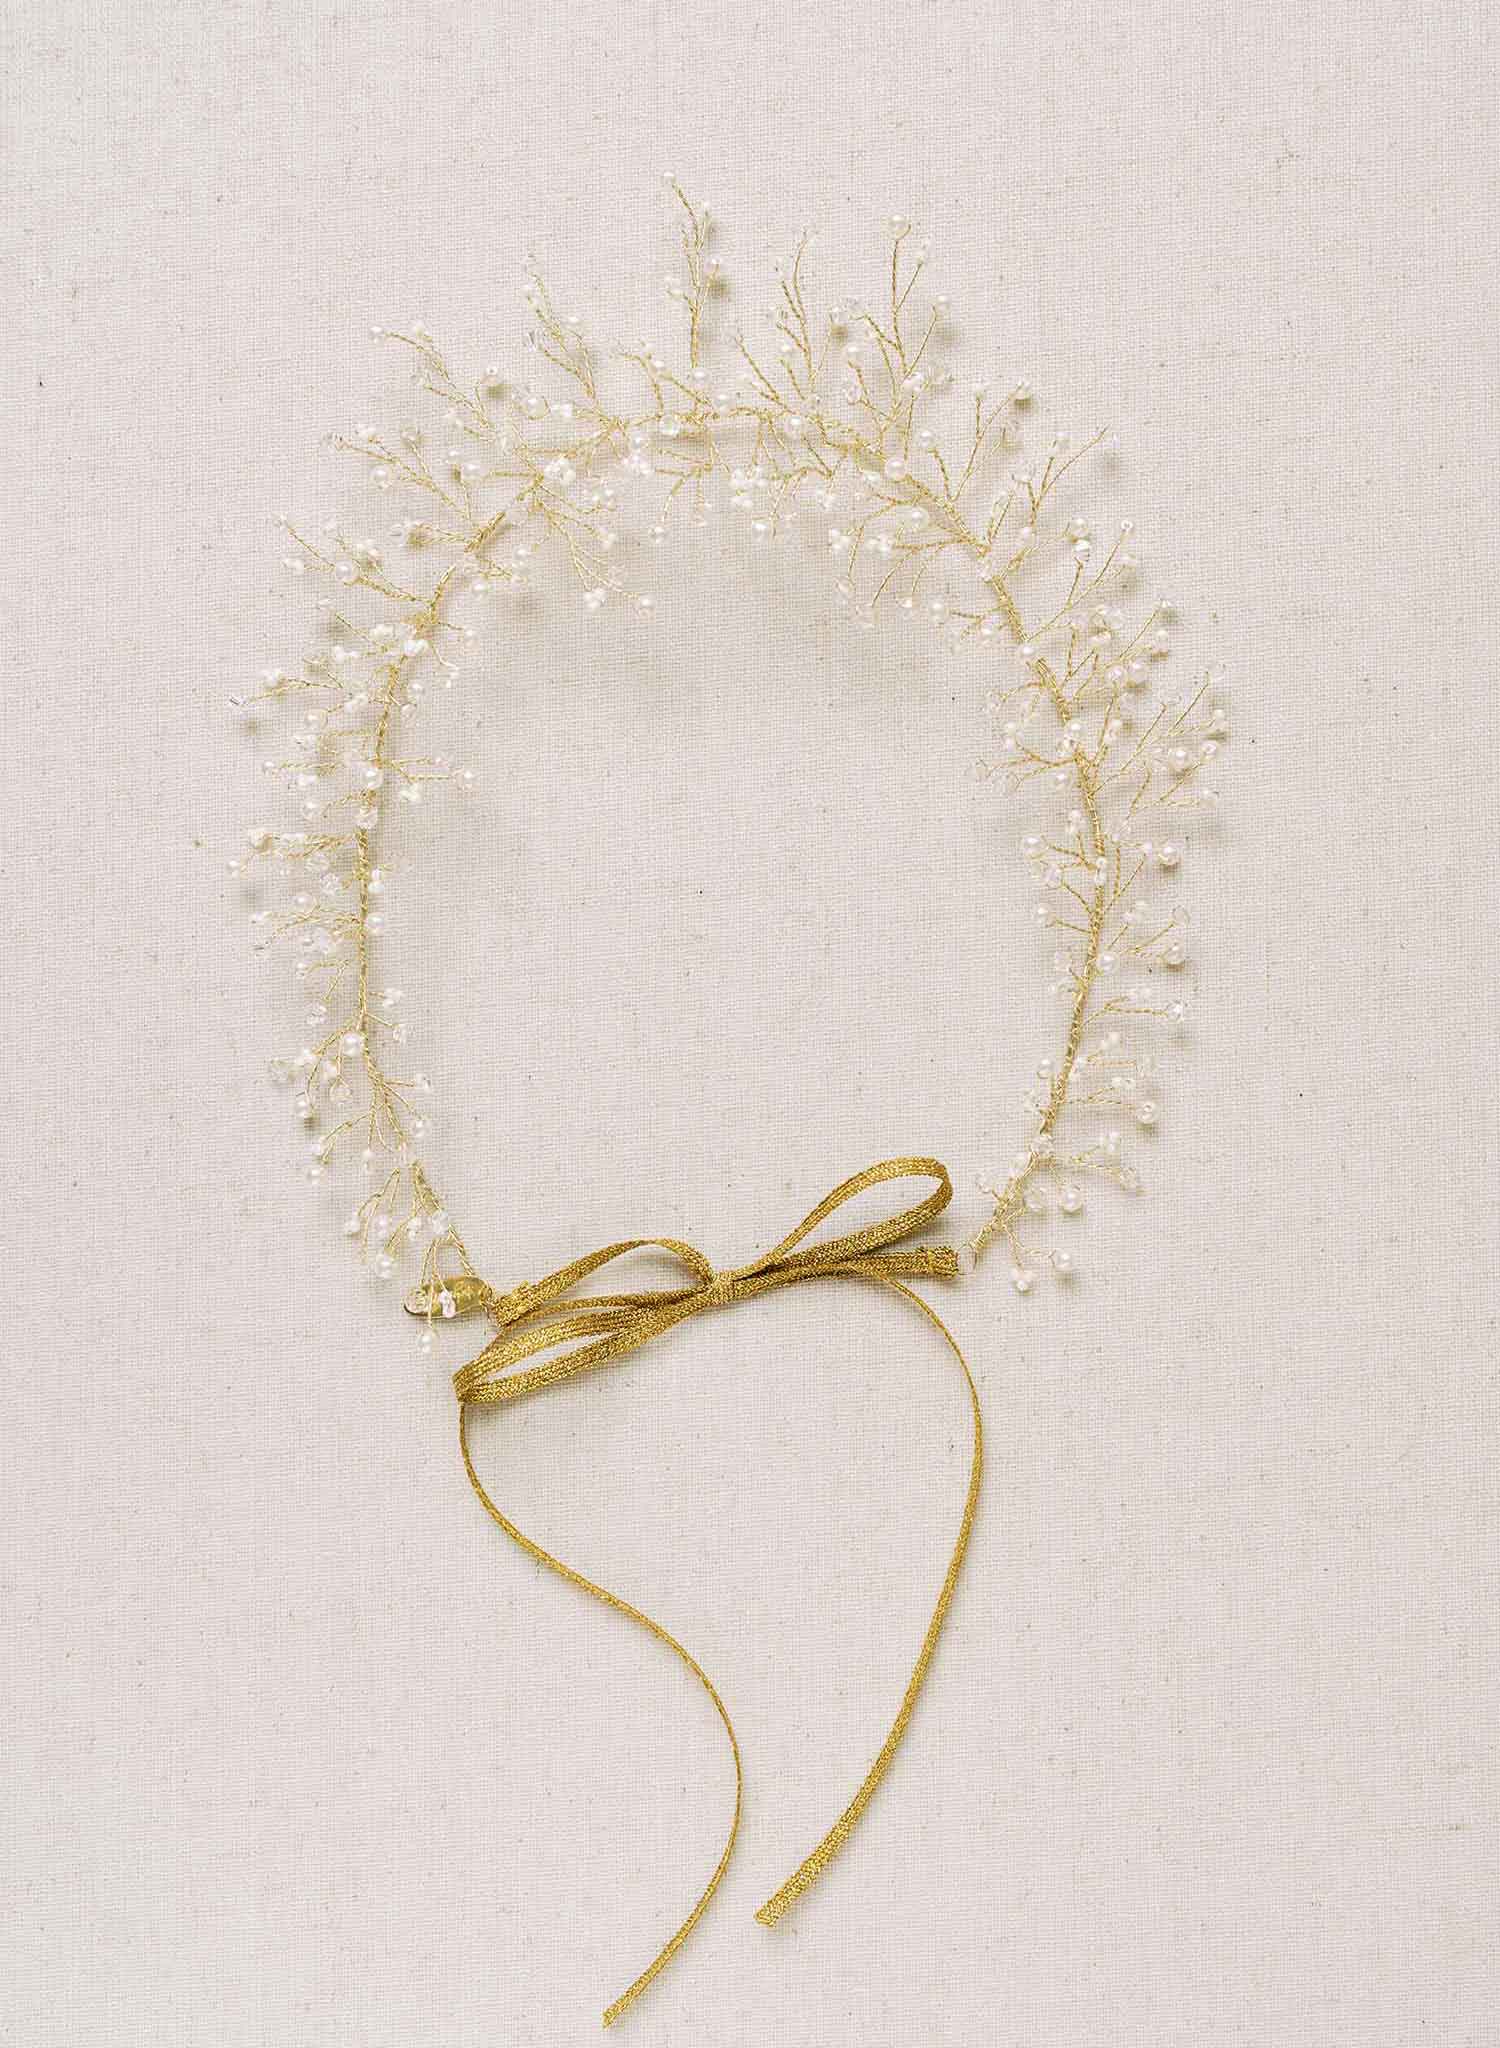 Wispy freshwater pearl and crystal hair vine - Style #2140